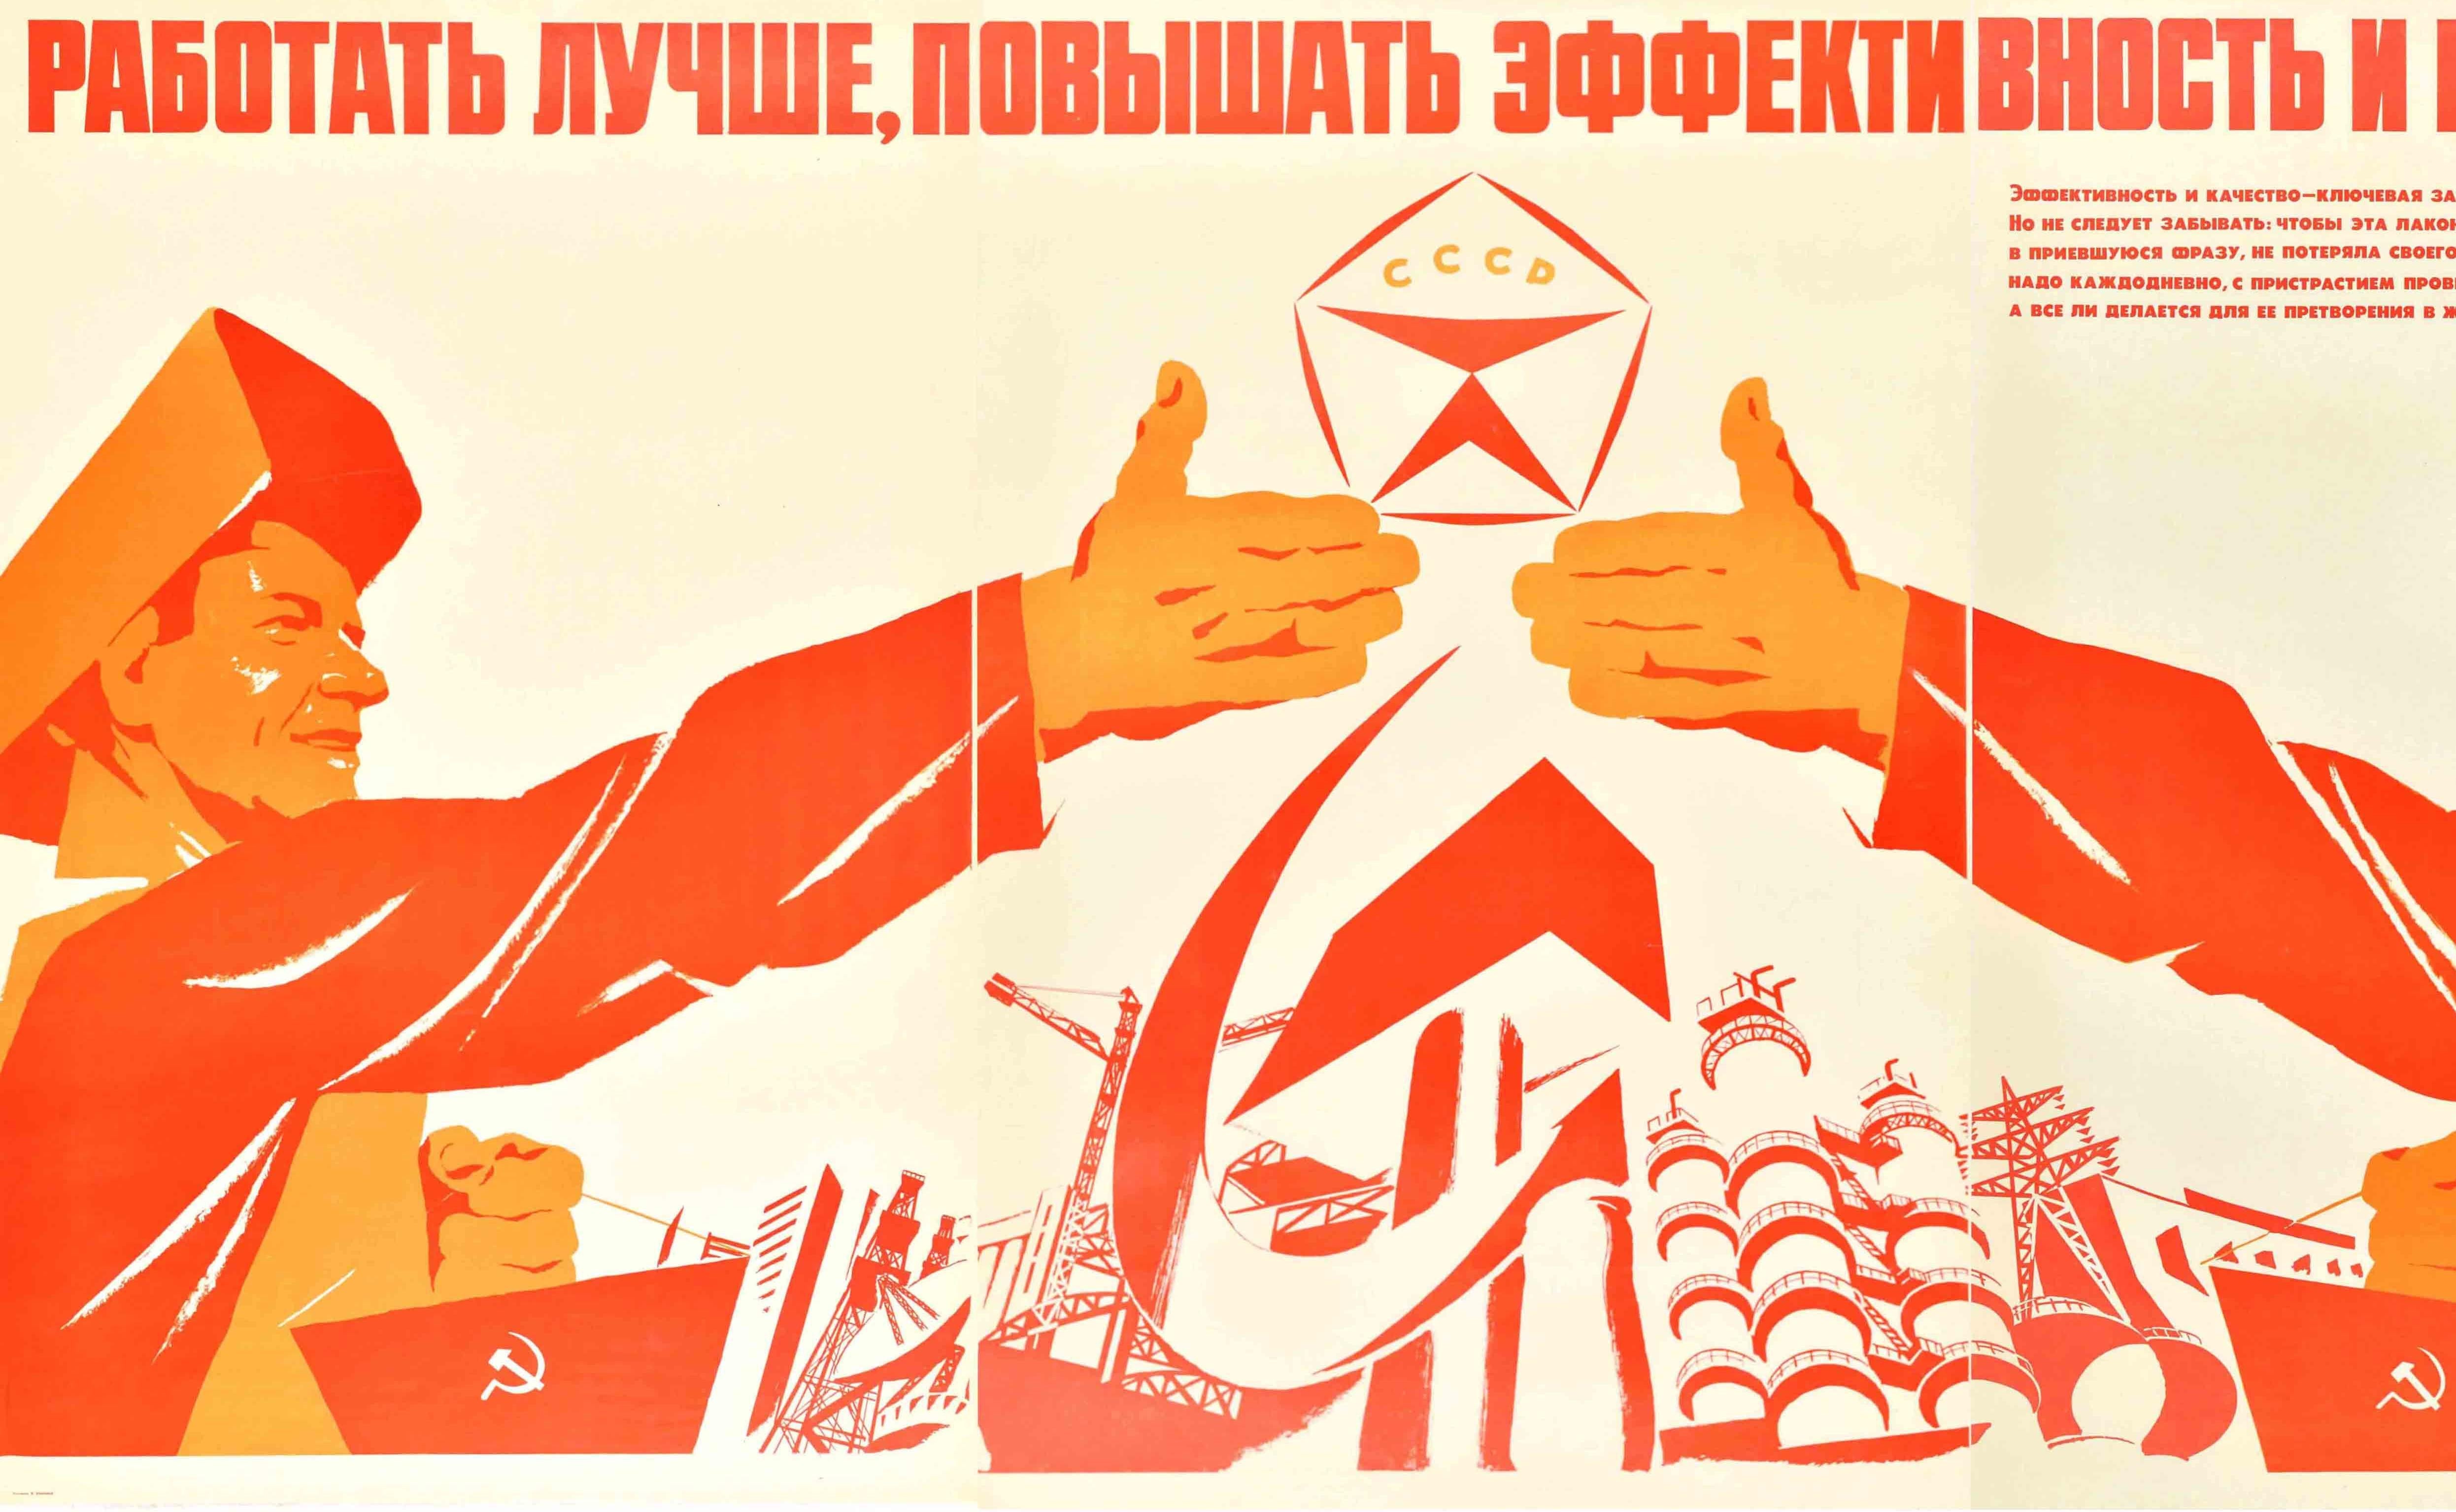 Originales sowjetisches Vintage-Poster Work Better Industry Efficiency Quality, UdSSR, CCCP (Weiß), Print, von V. Kononov